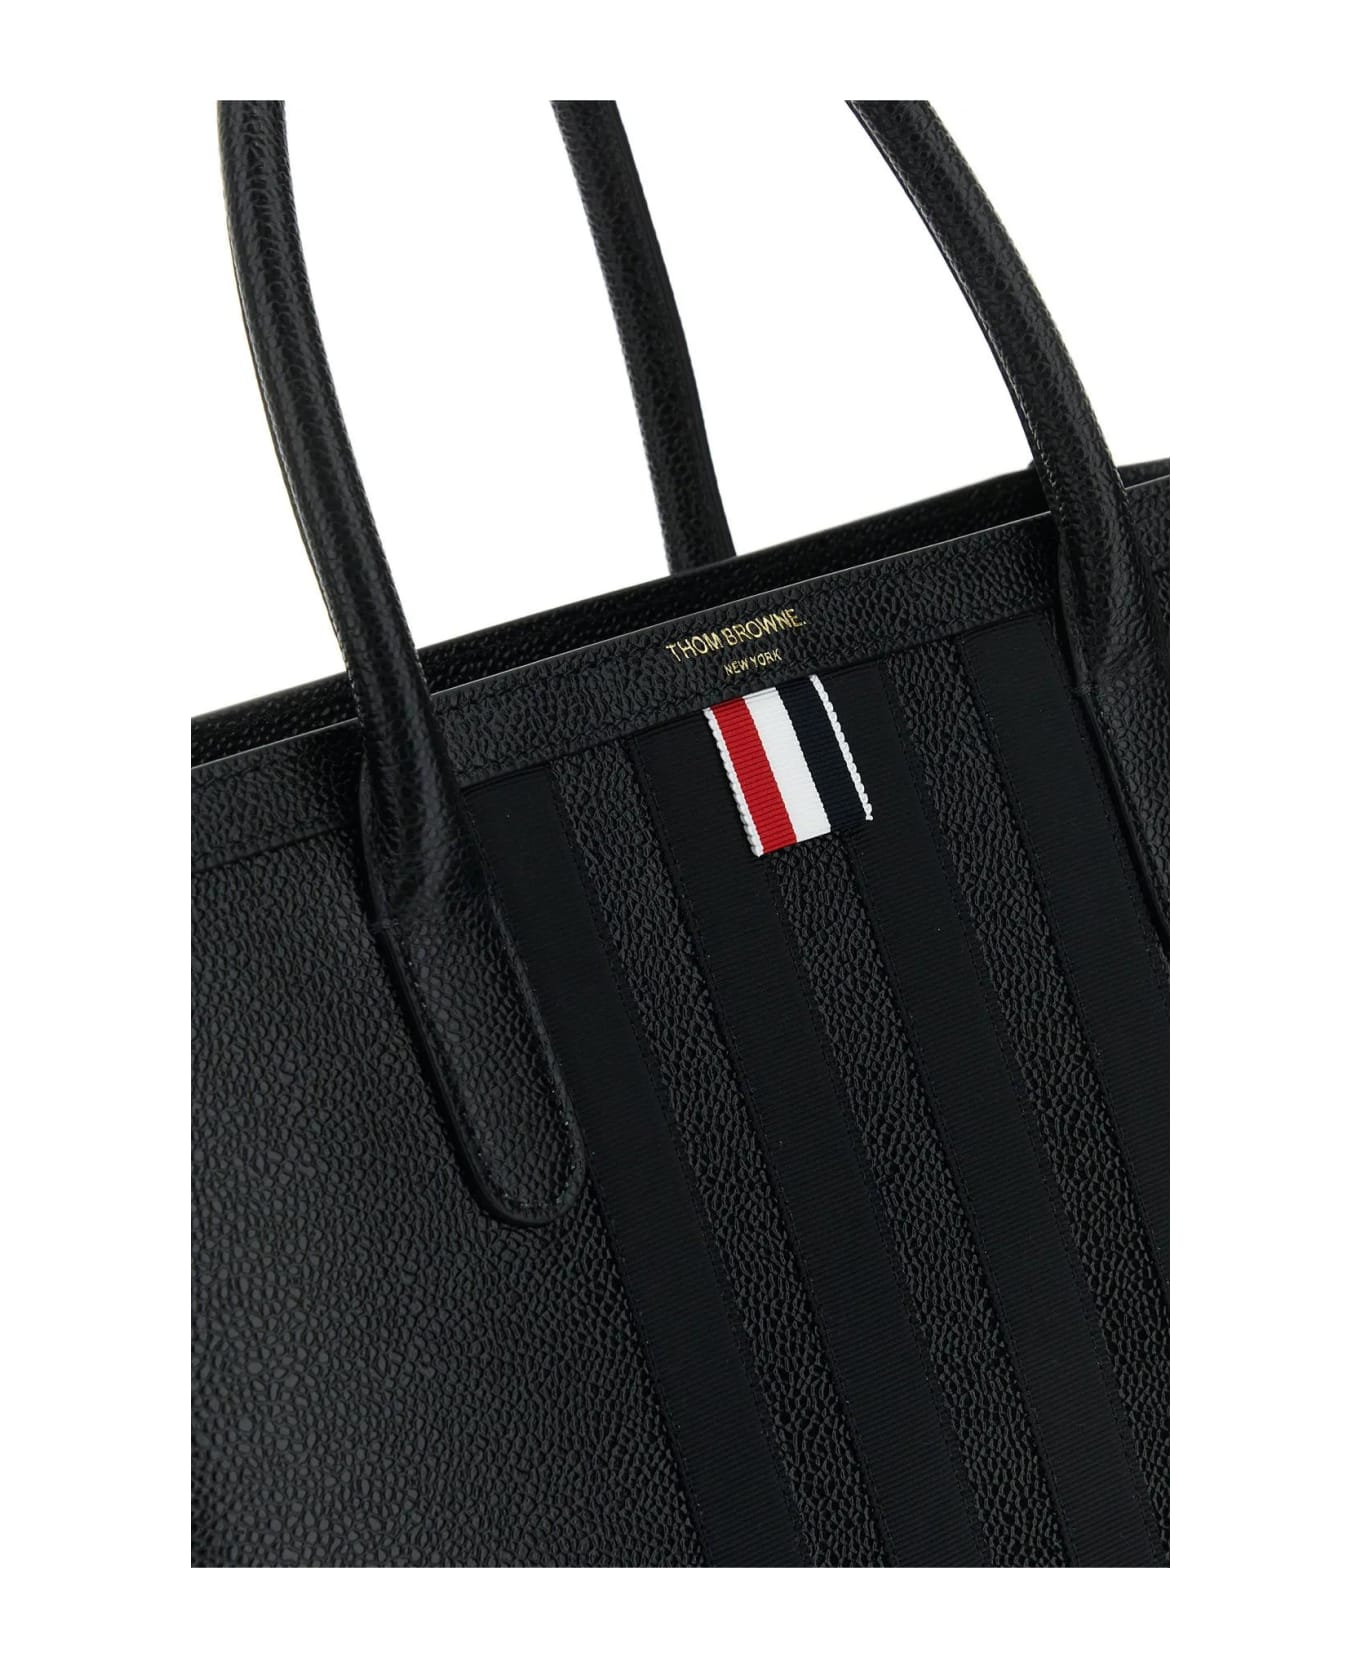 Thom Browne Black Leather Vertical Tote Handbag - Black